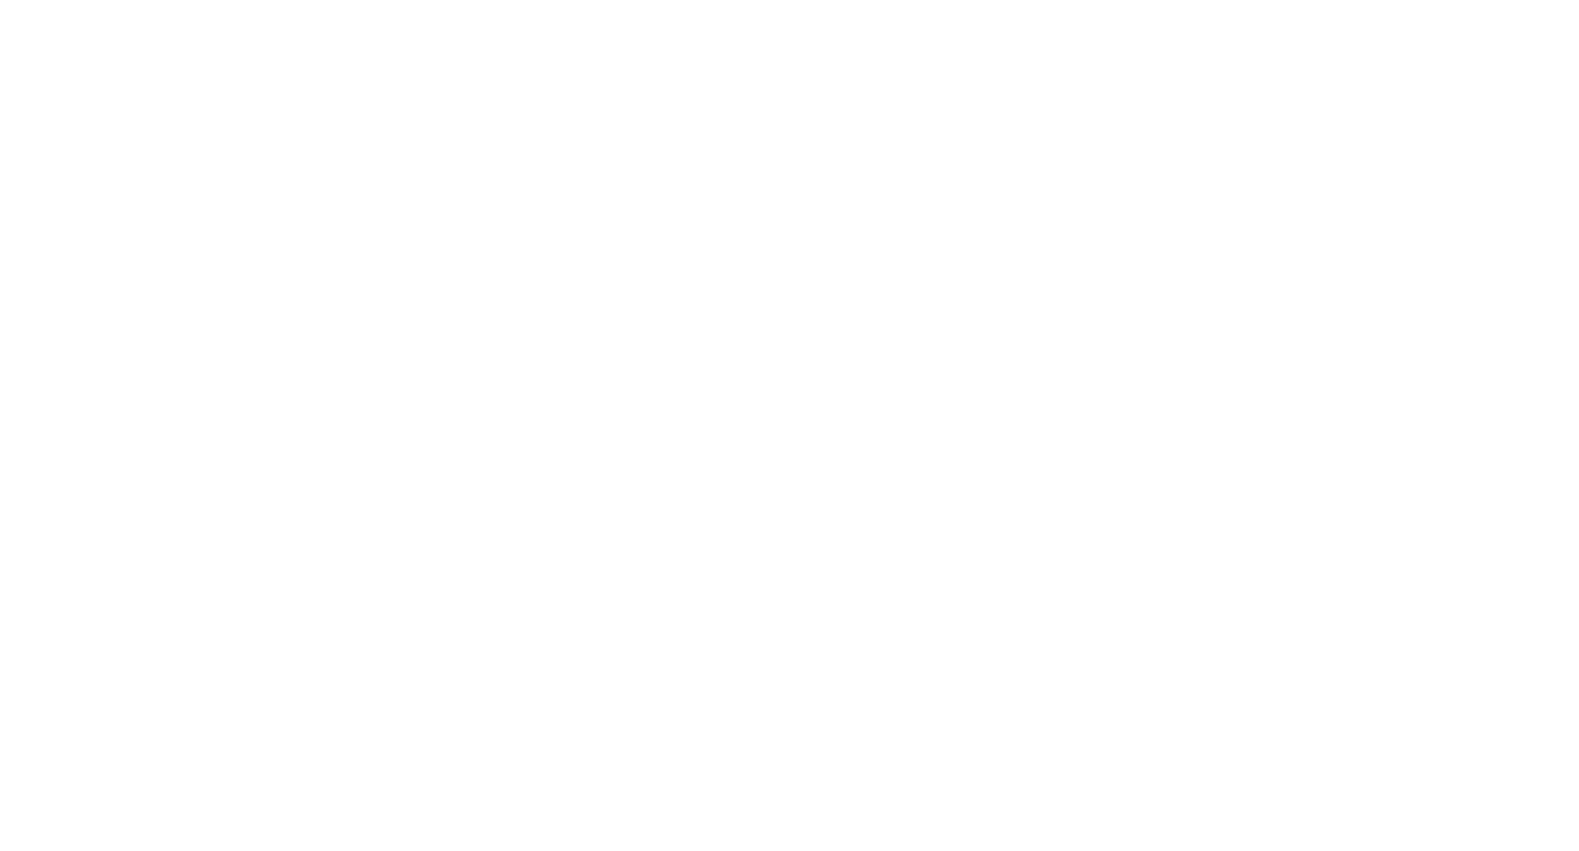 G-III Apparel Group logo for dark backgrounds (transparent PNG)